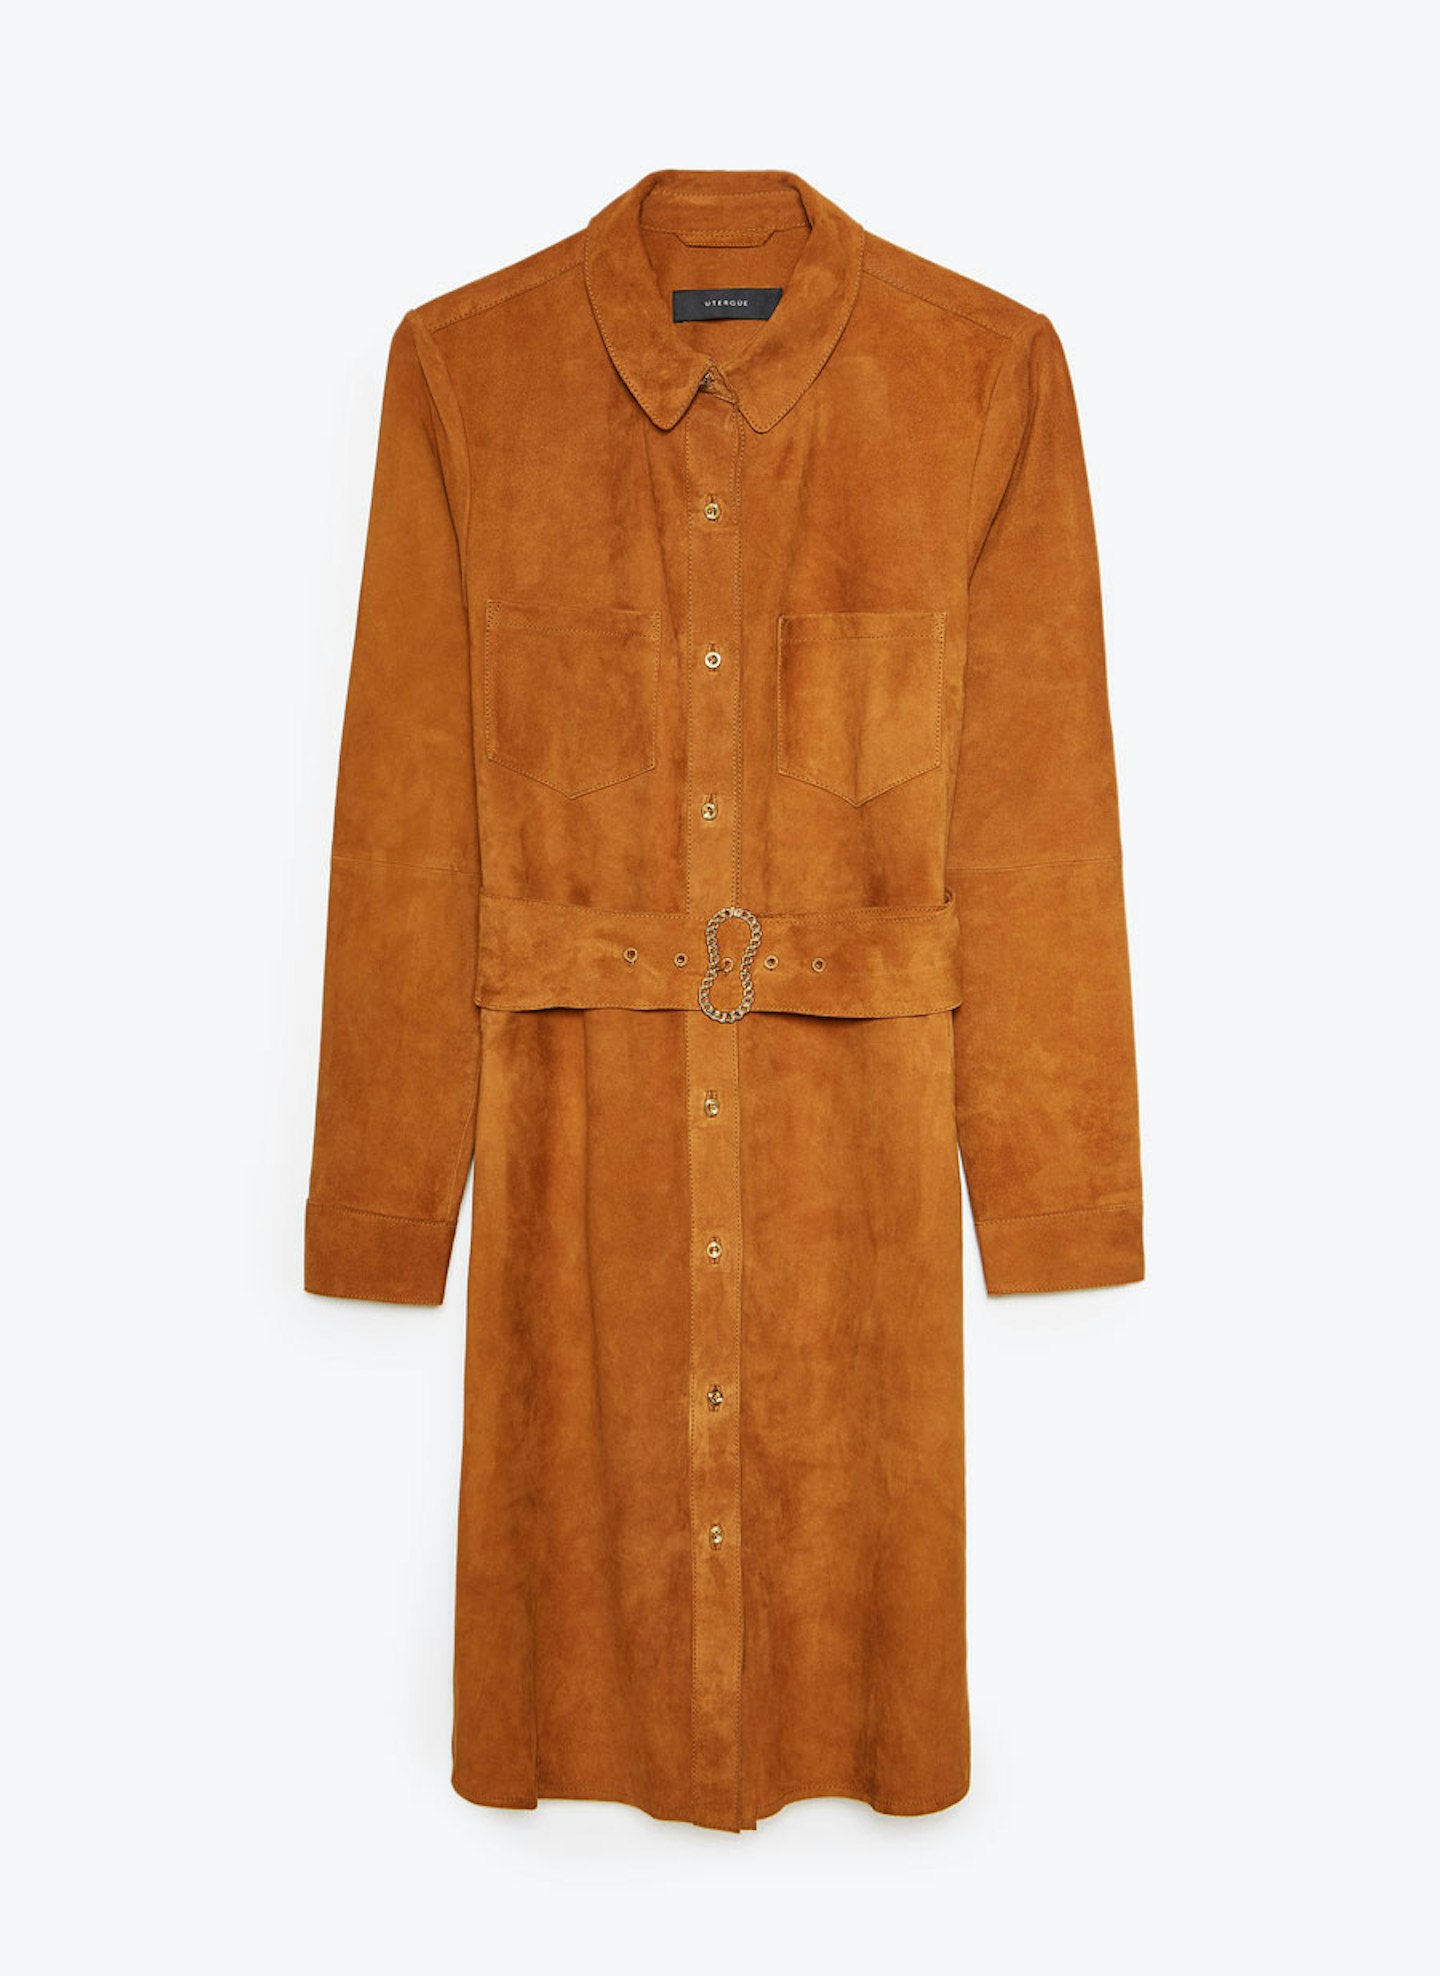 Uterque, Leather Overshirt, £250